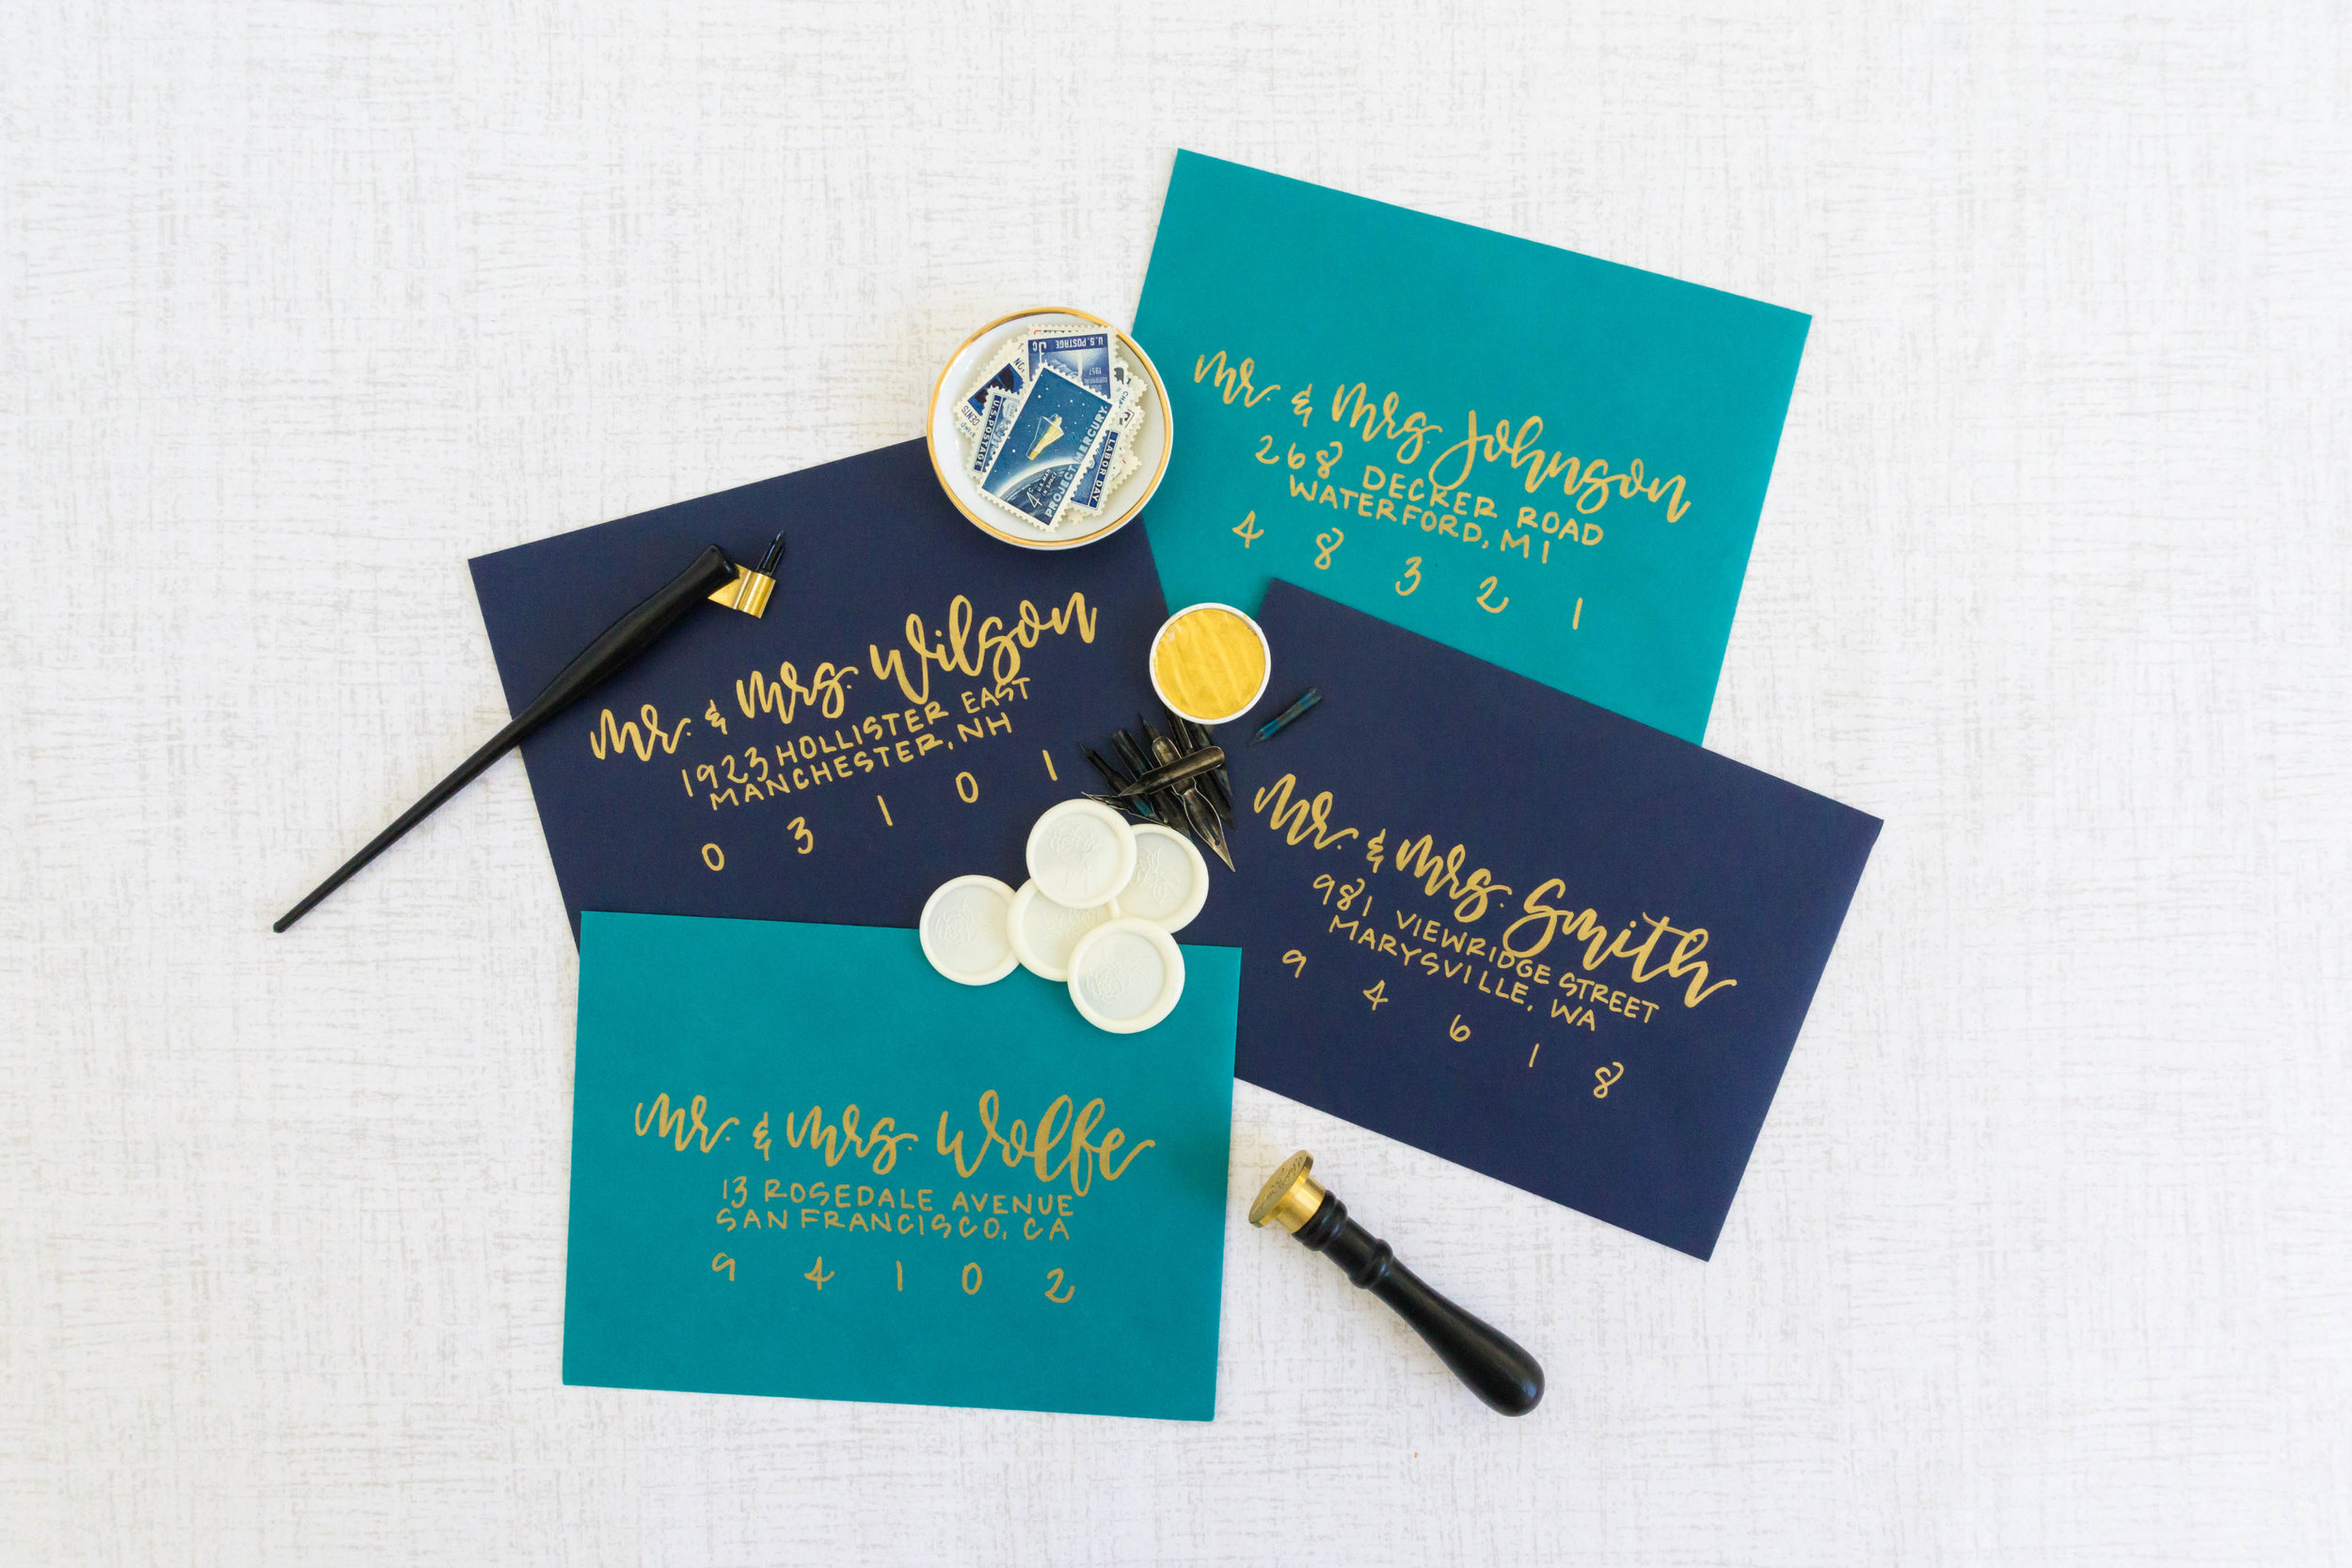 love-fern-design-studio-custom-wedding-invitations-for-the-modern-couple-modern-calligraphy-in-seattle-washington-custom-wedding-stationery-navy-gold-teal-envelopes